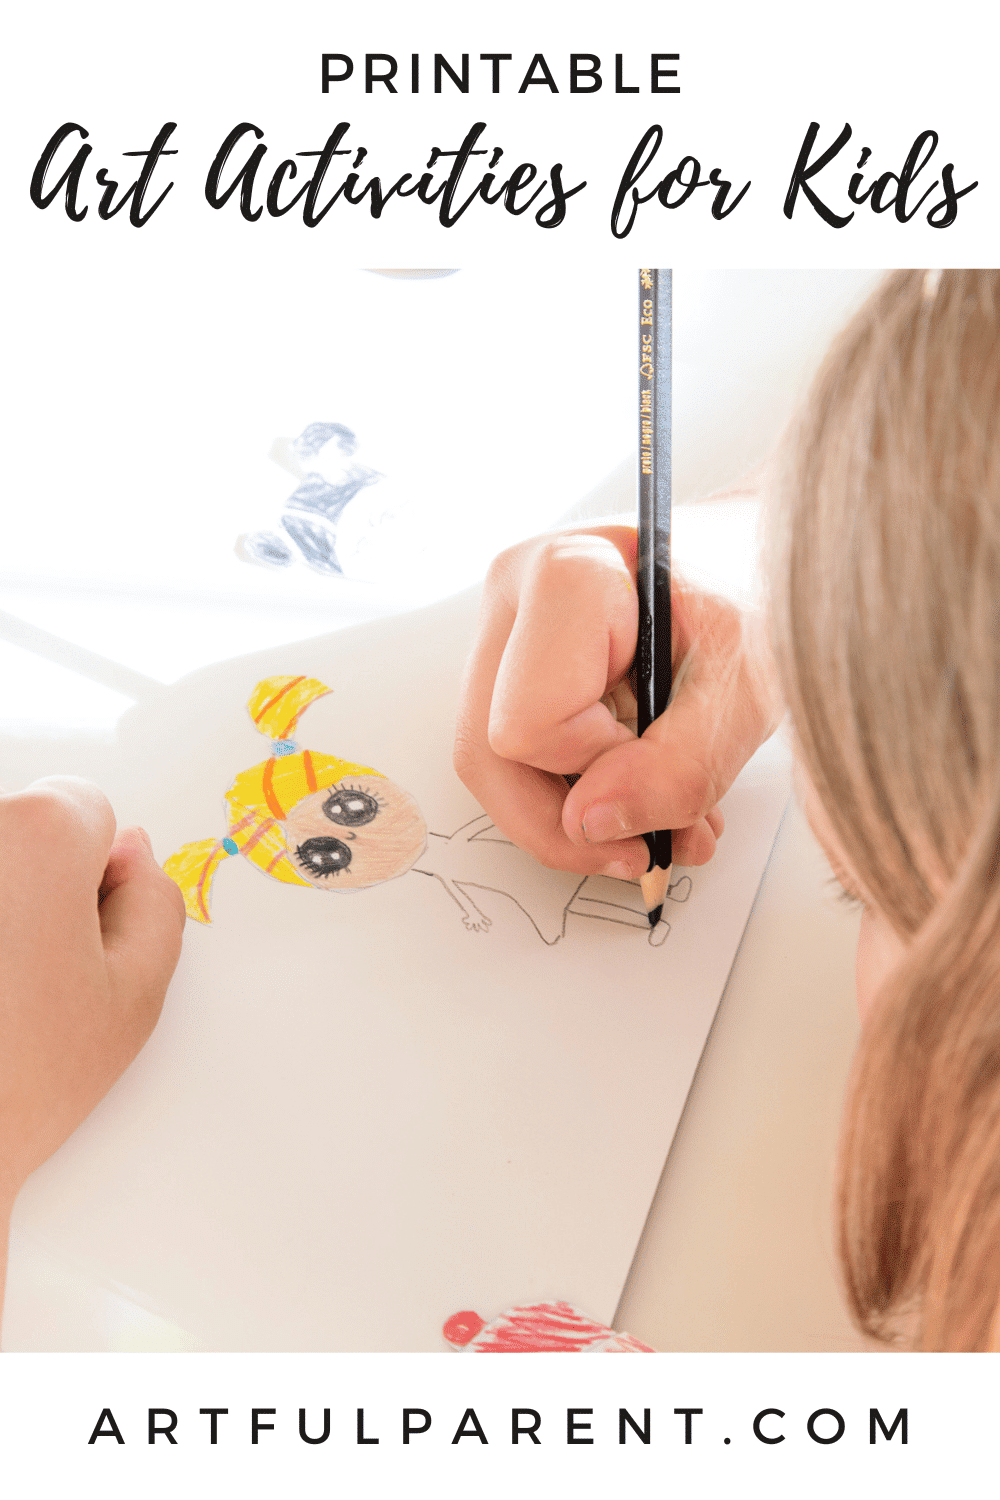 16 Printable Art Activities for Kids